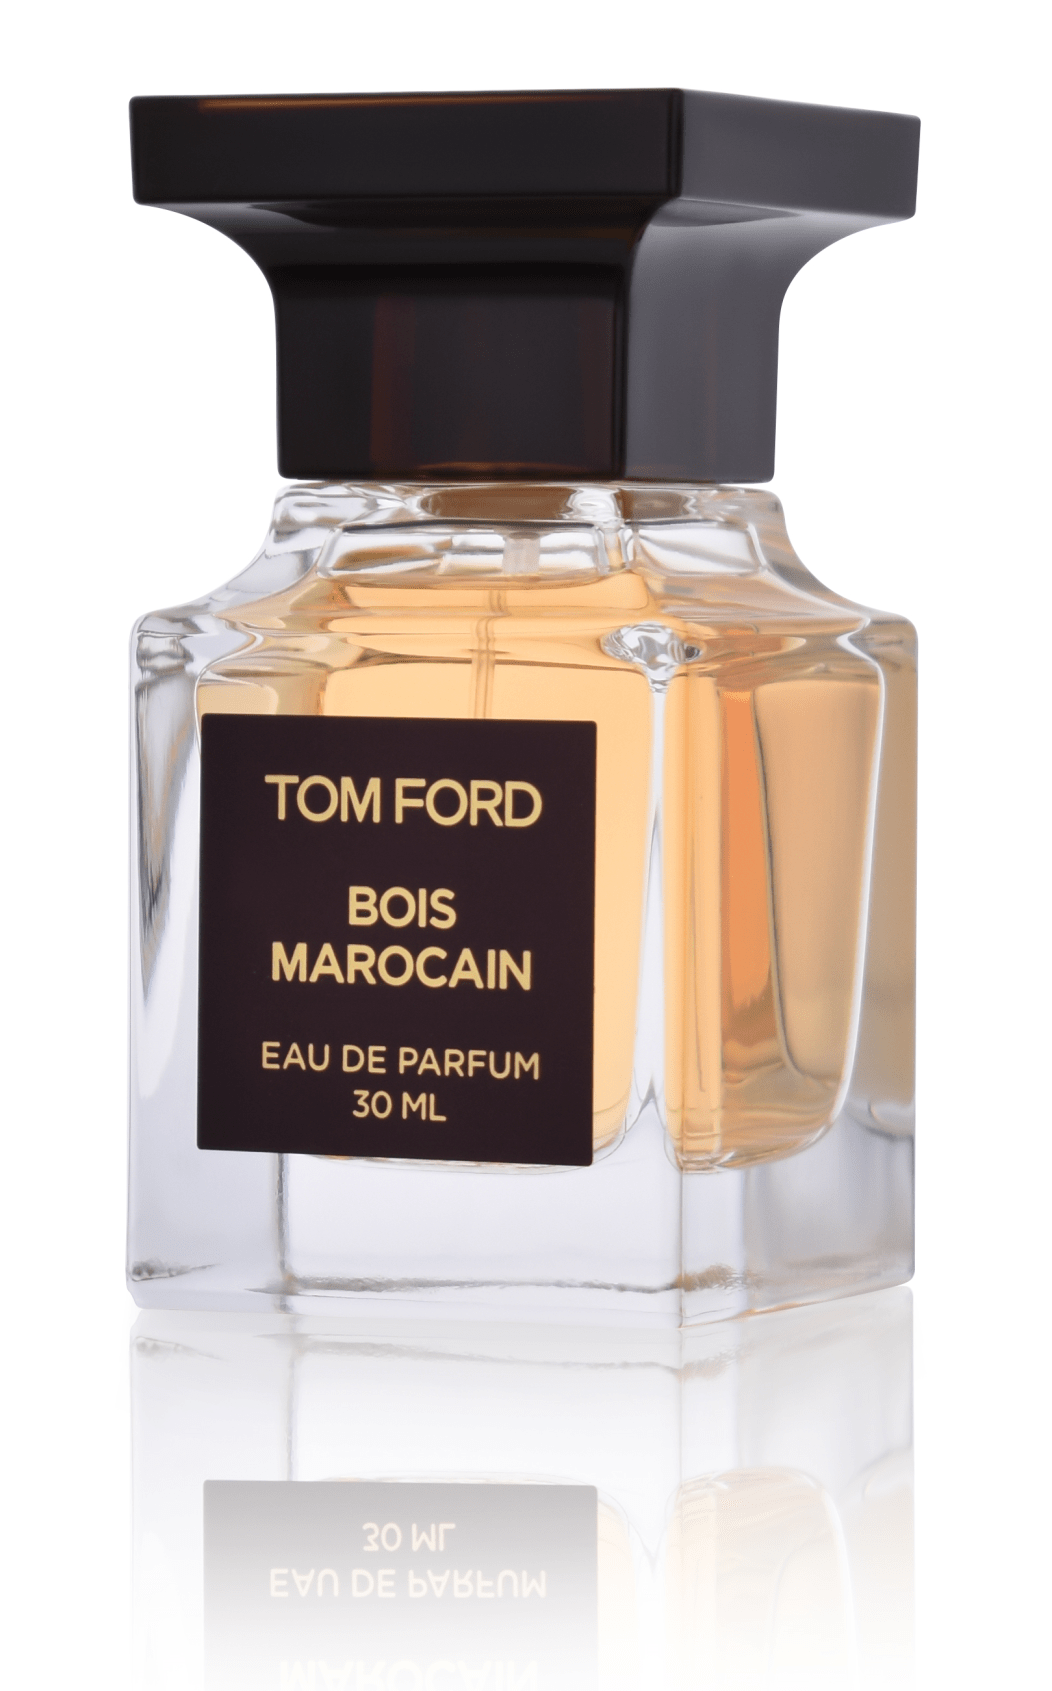 Tom Ford Bois Marocain 30 ml Eau de Parfum 